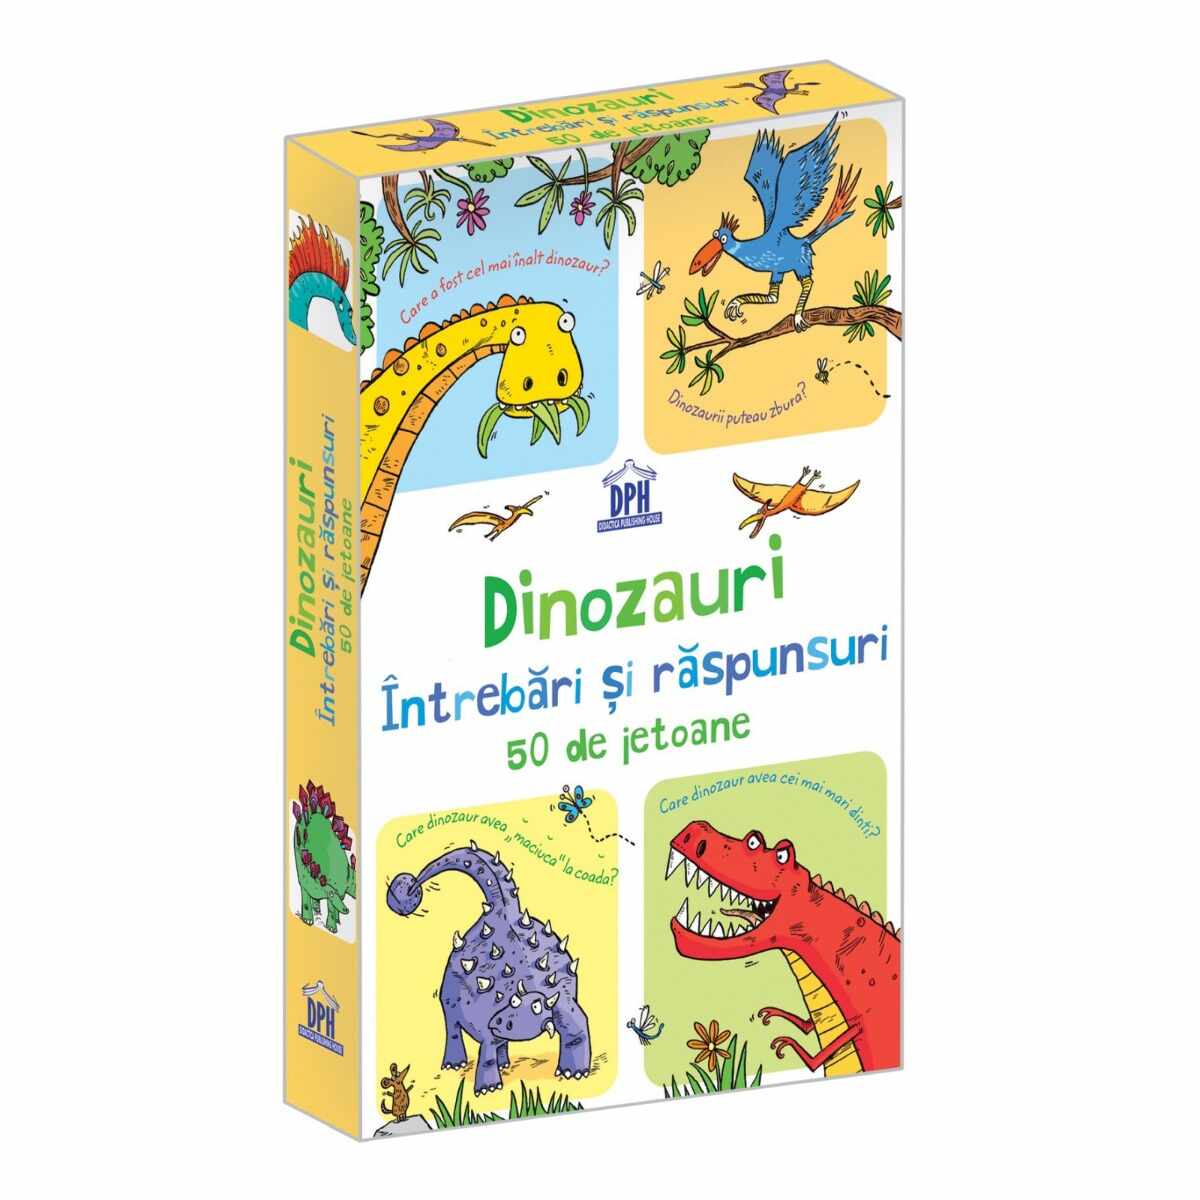 Dinozauri, Intrebari si raspunsuri, 50 jetoane, Editura DPH